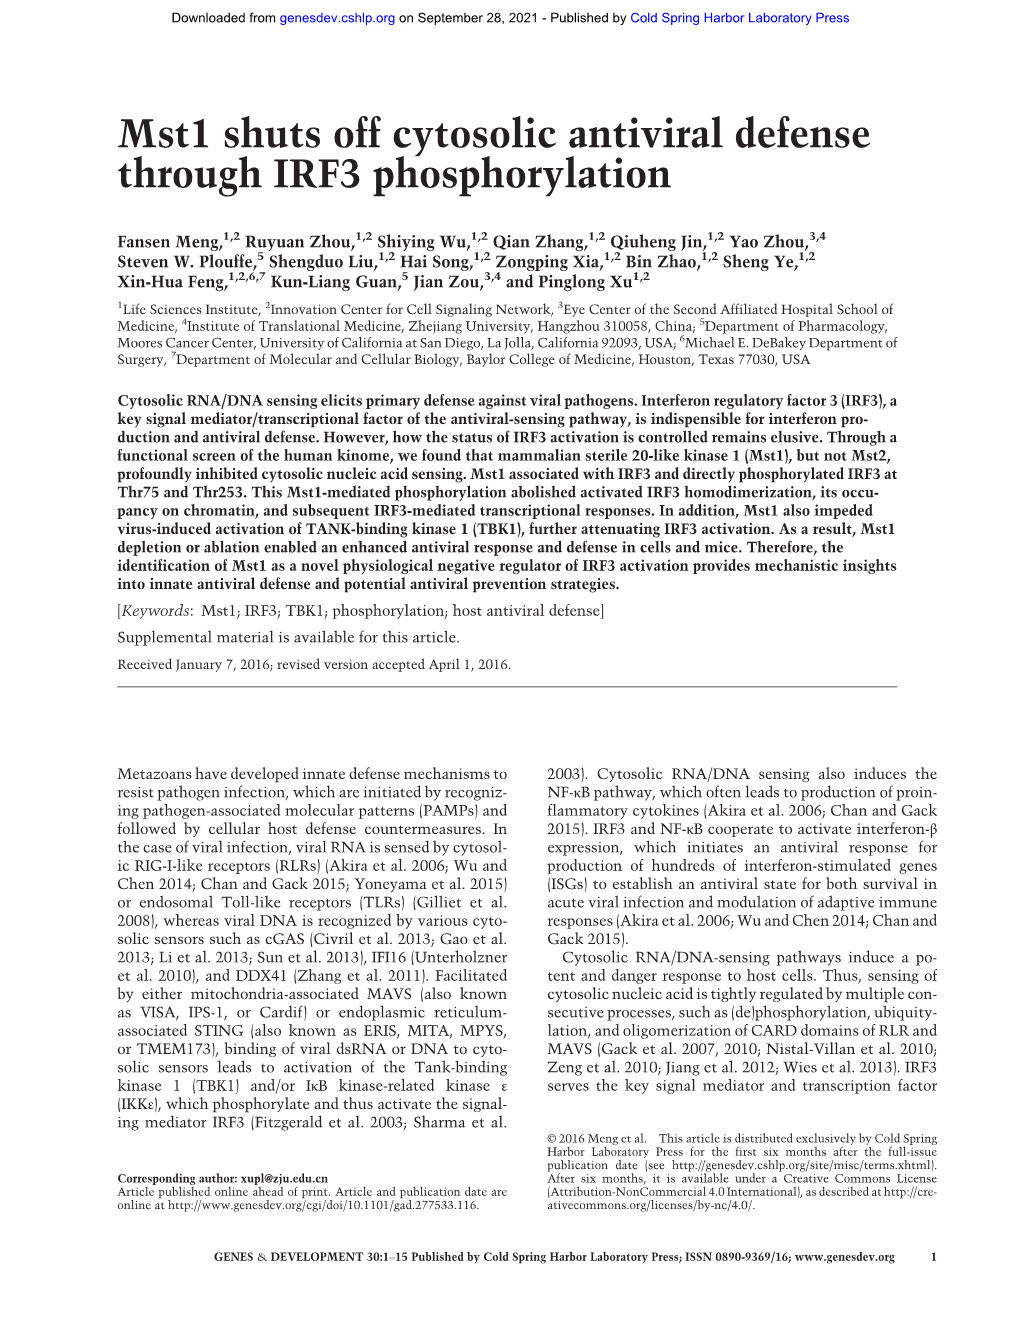 Mst1 Shuts Off Cytosolic Antiviral Defense Through IRF3 Phosphorylation